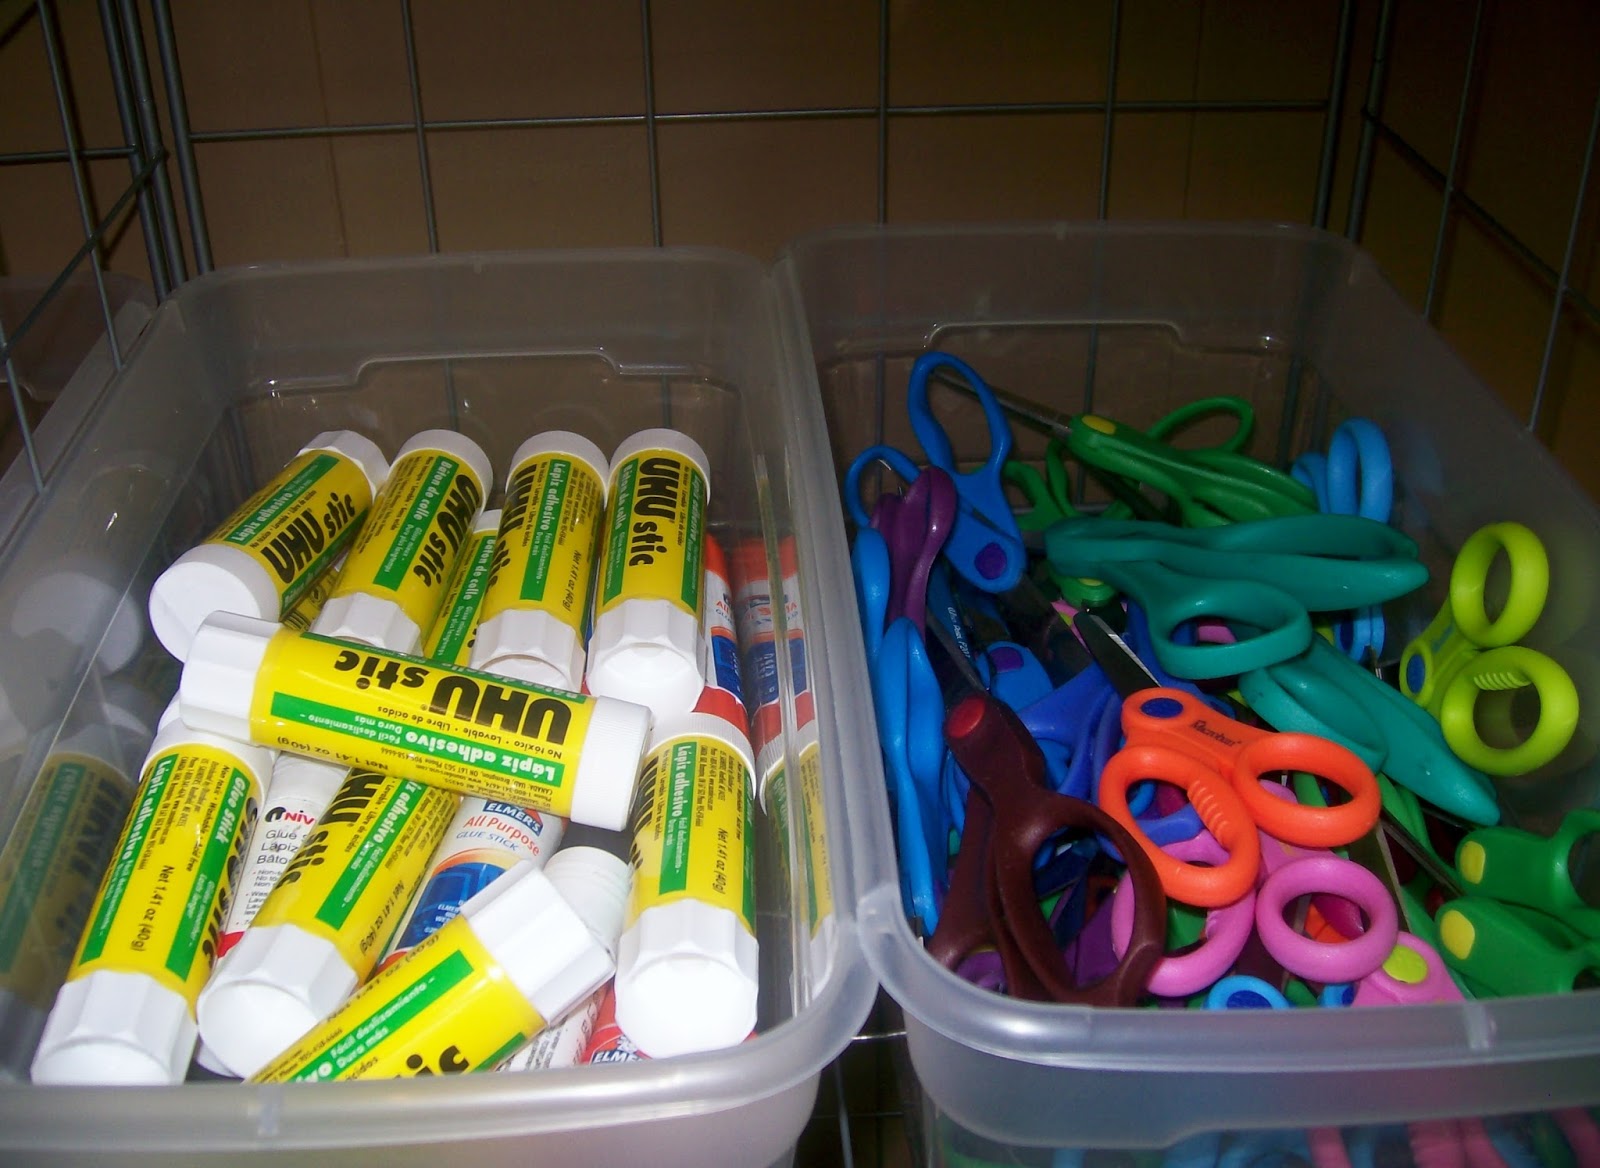 glue sticks and scissors in tubs. 